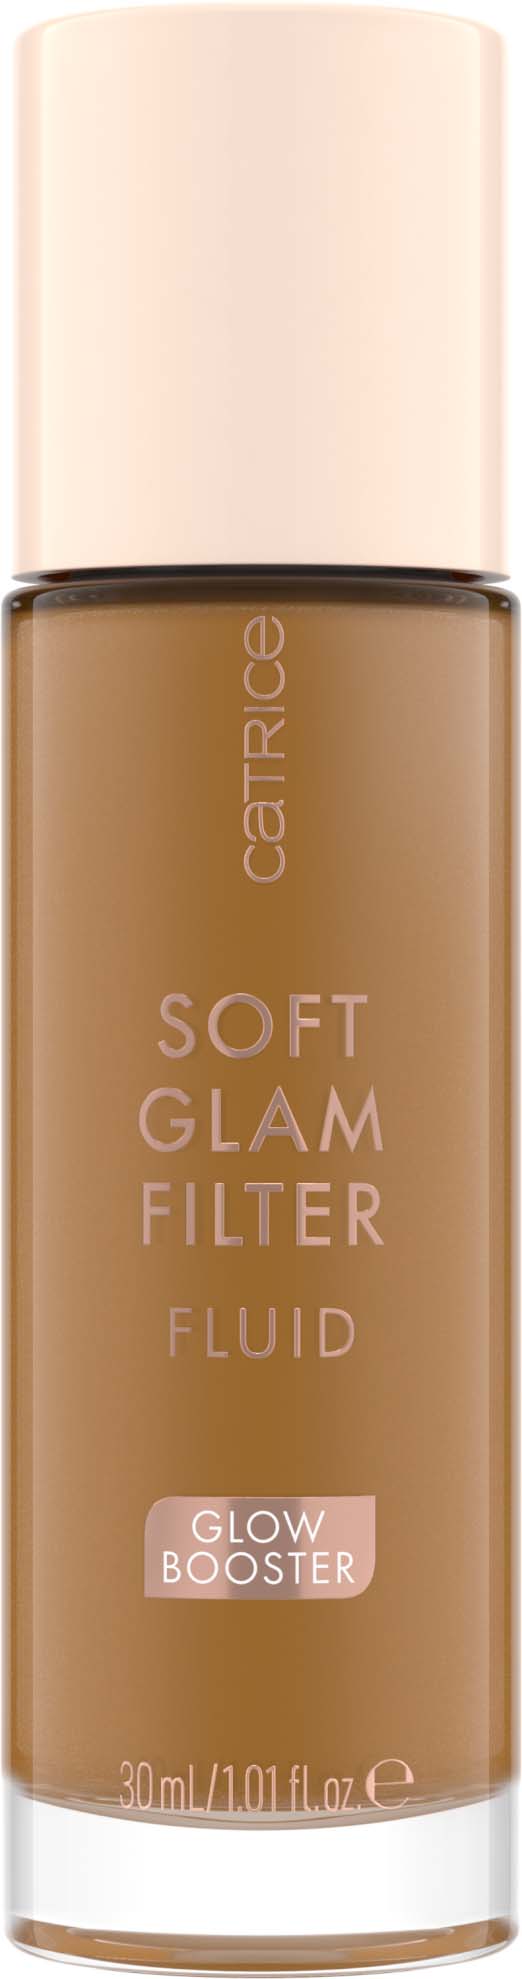 Filter Tan-Deep 080 Catrice Soft Fluid Glam